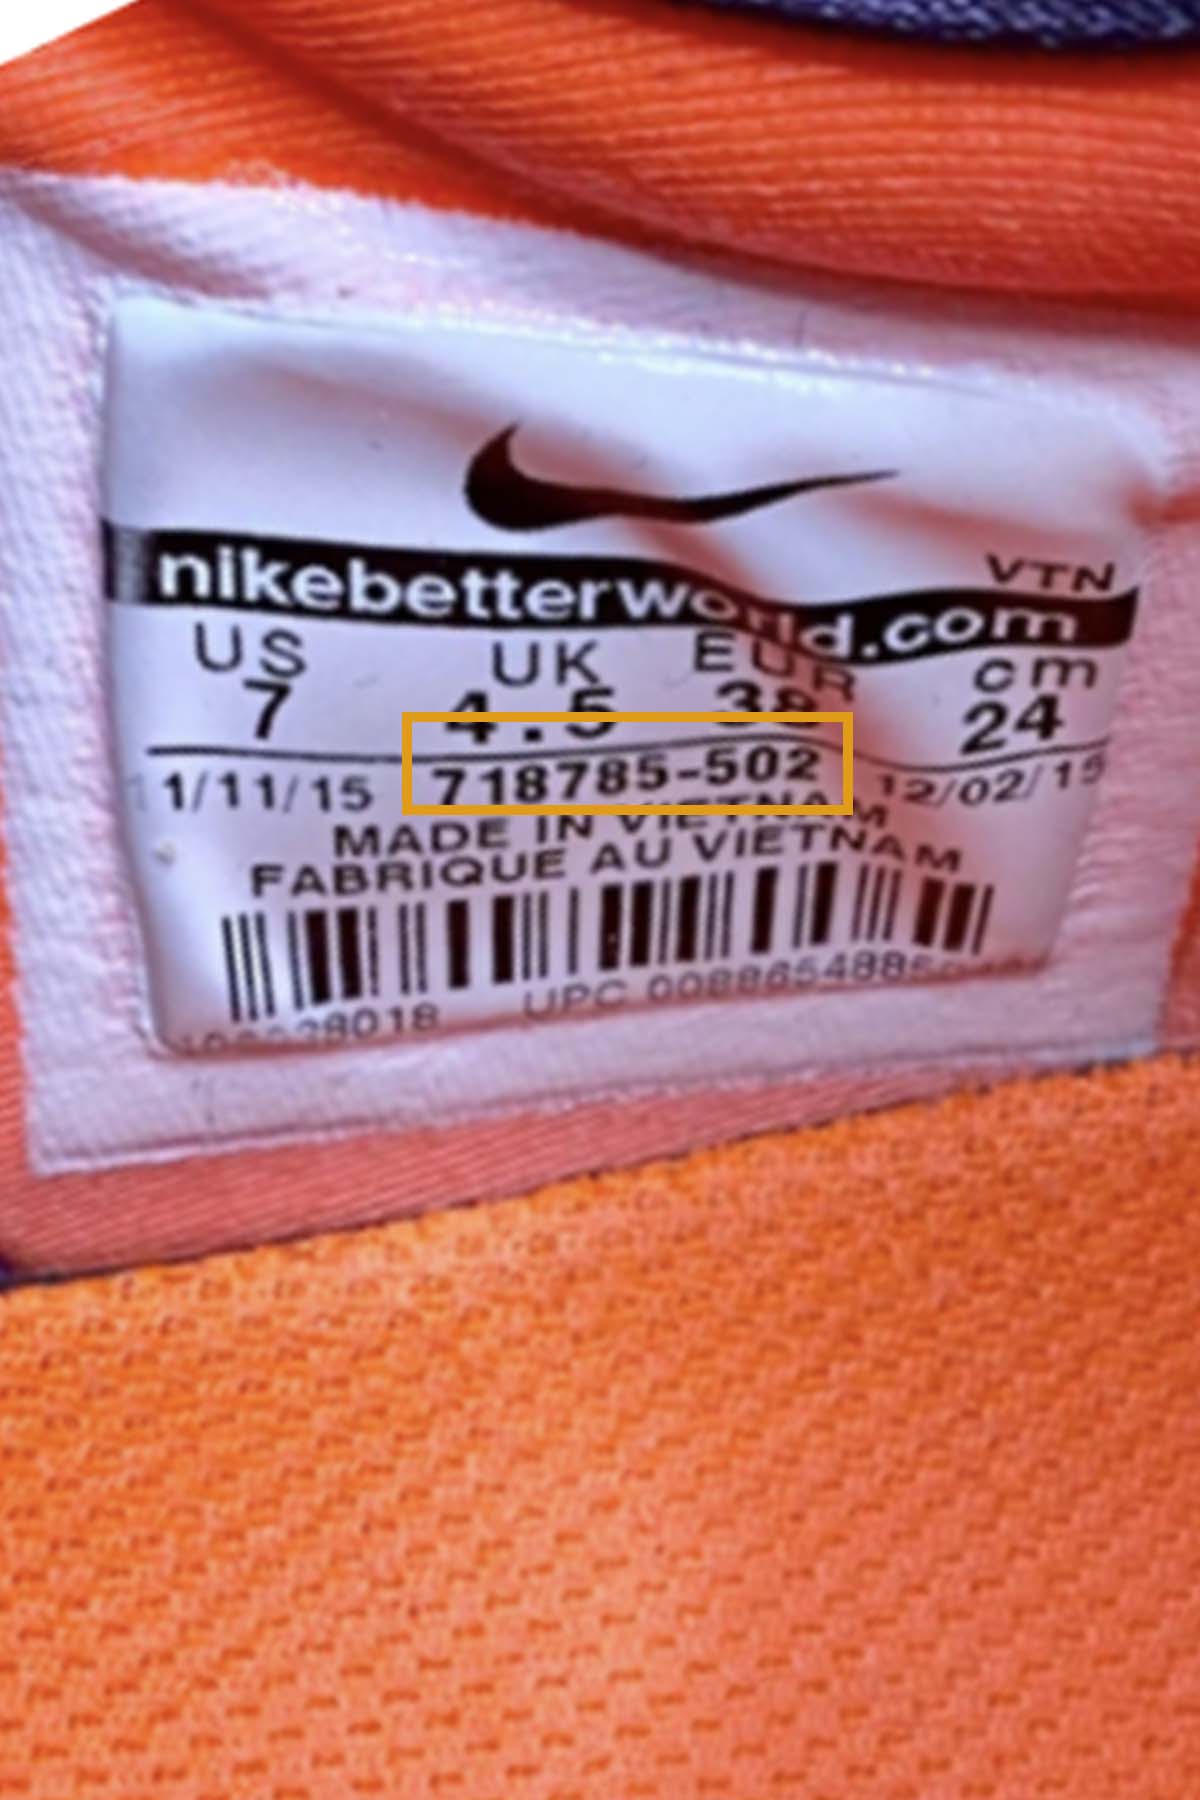 a nike shoe style tag.